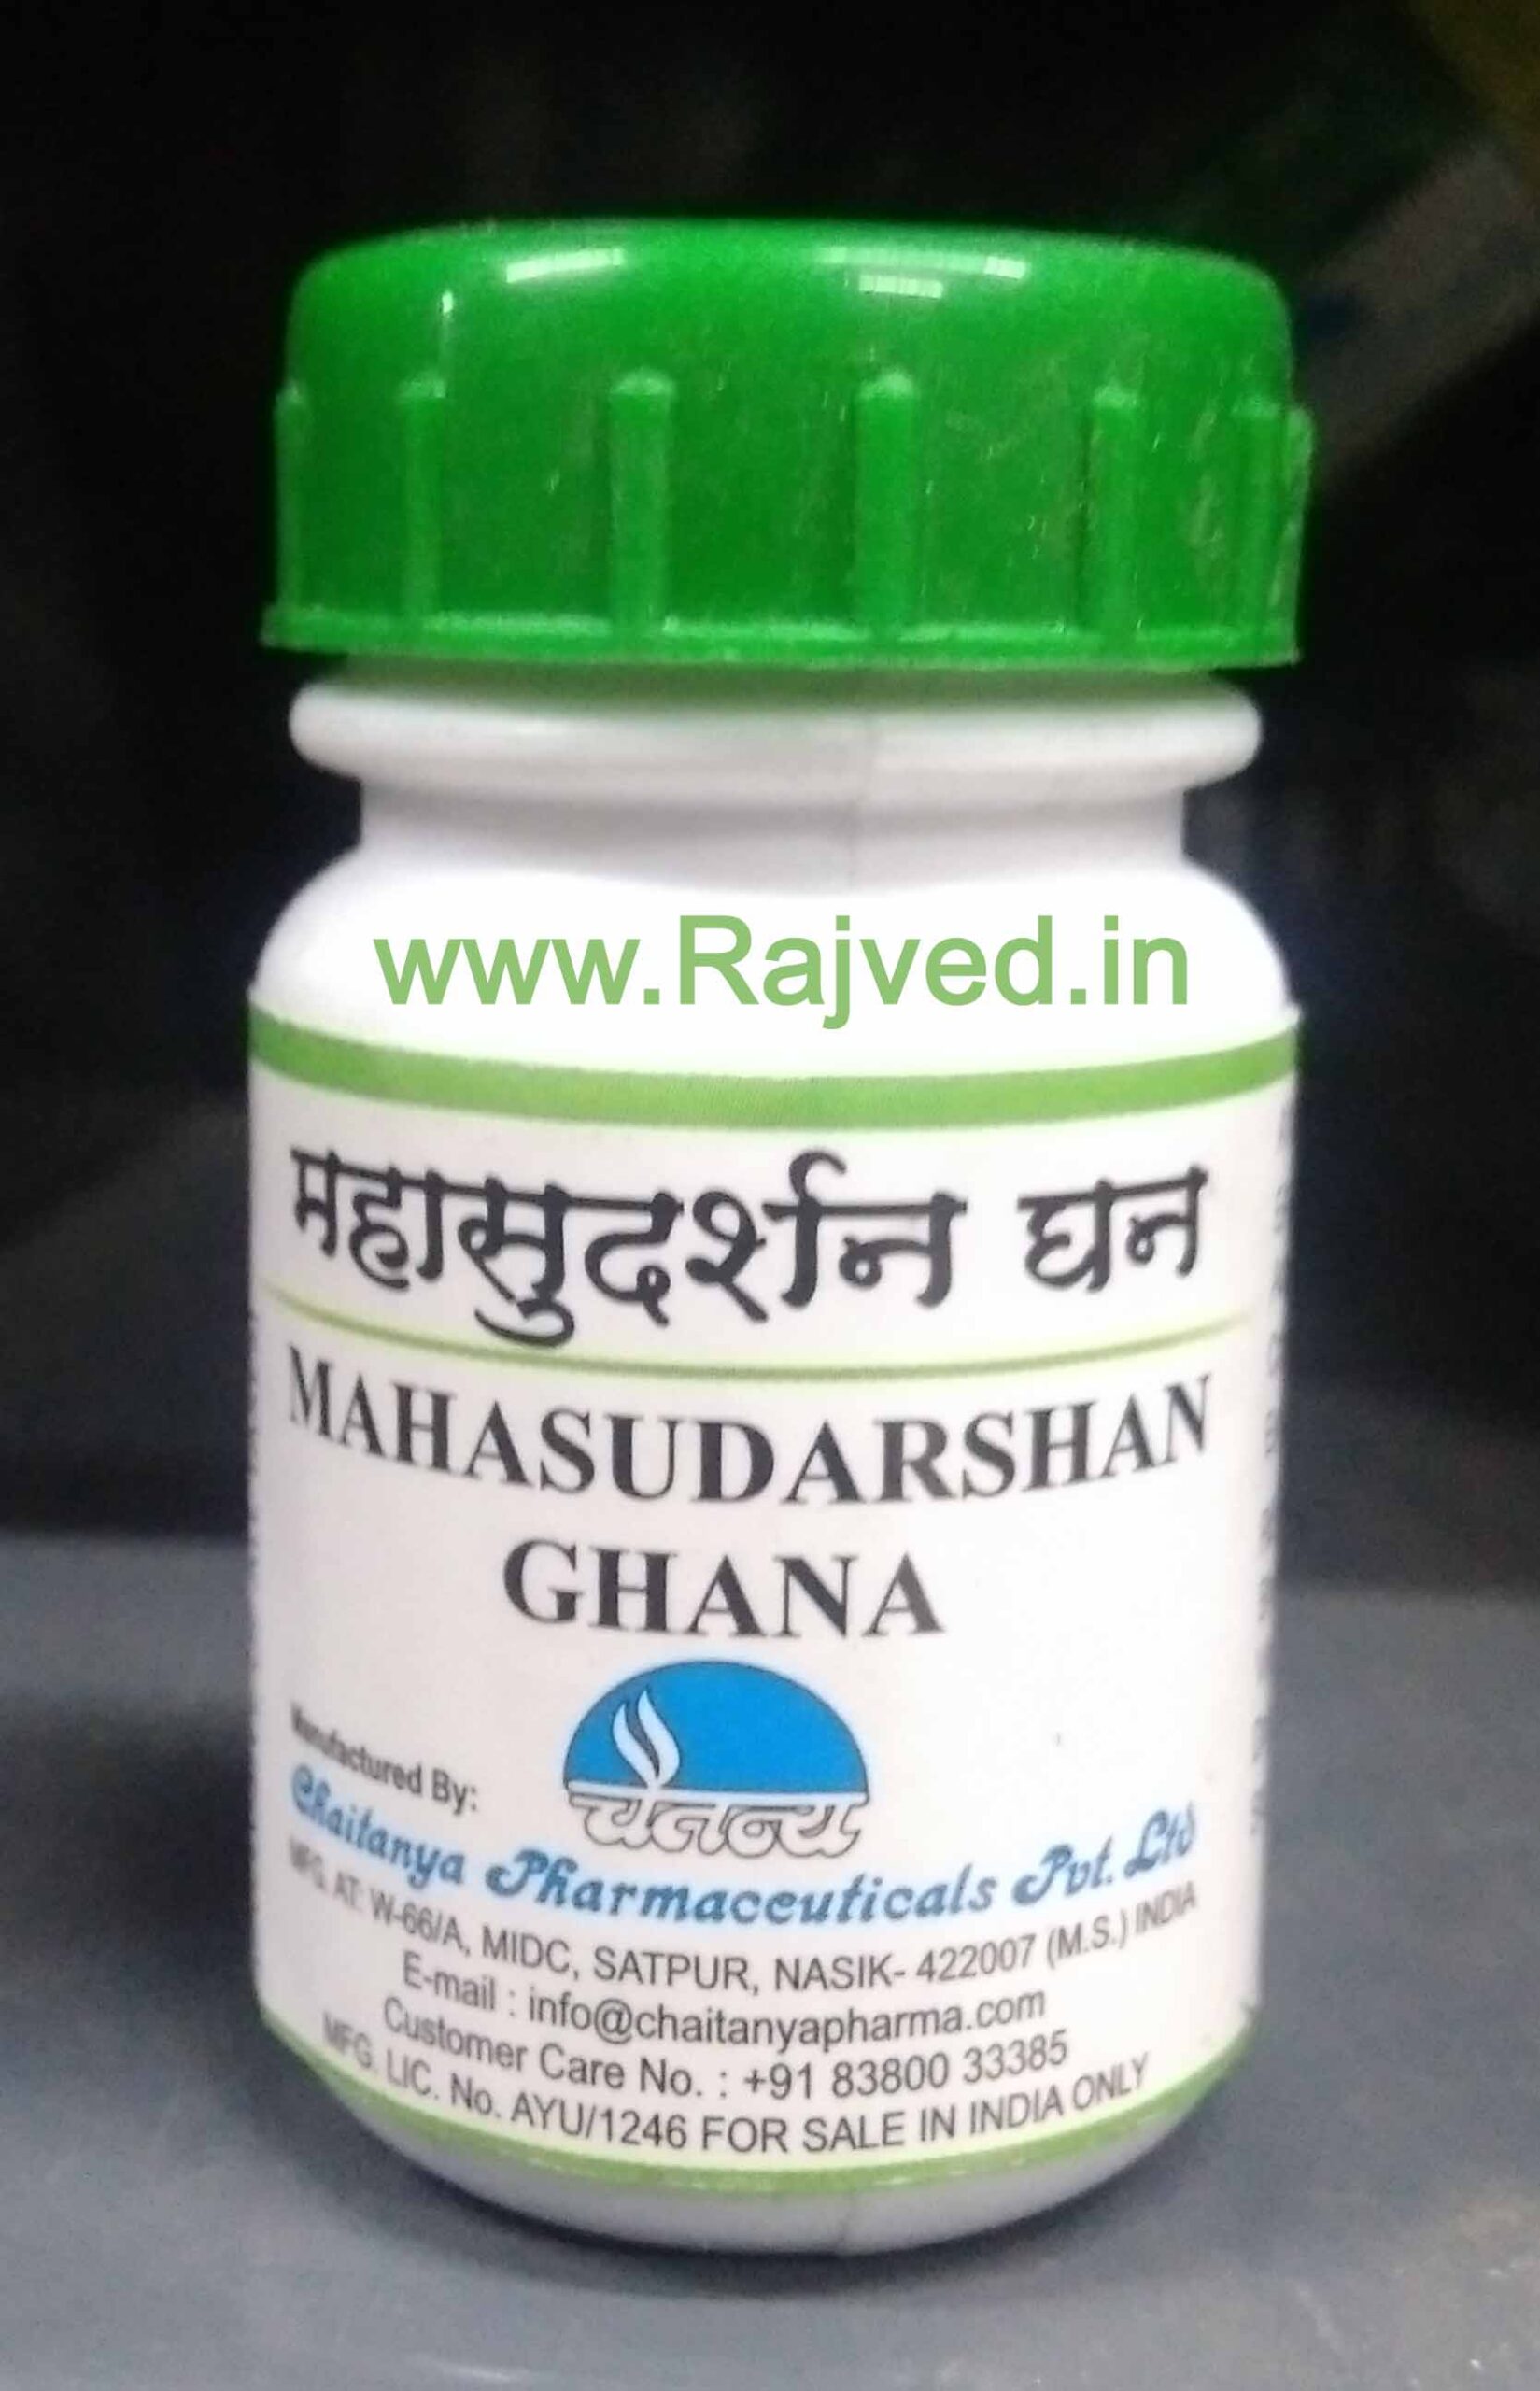 mahasudarshan ghana 500 tab upto 20% off free shipping chaitanya pharmaceuticals